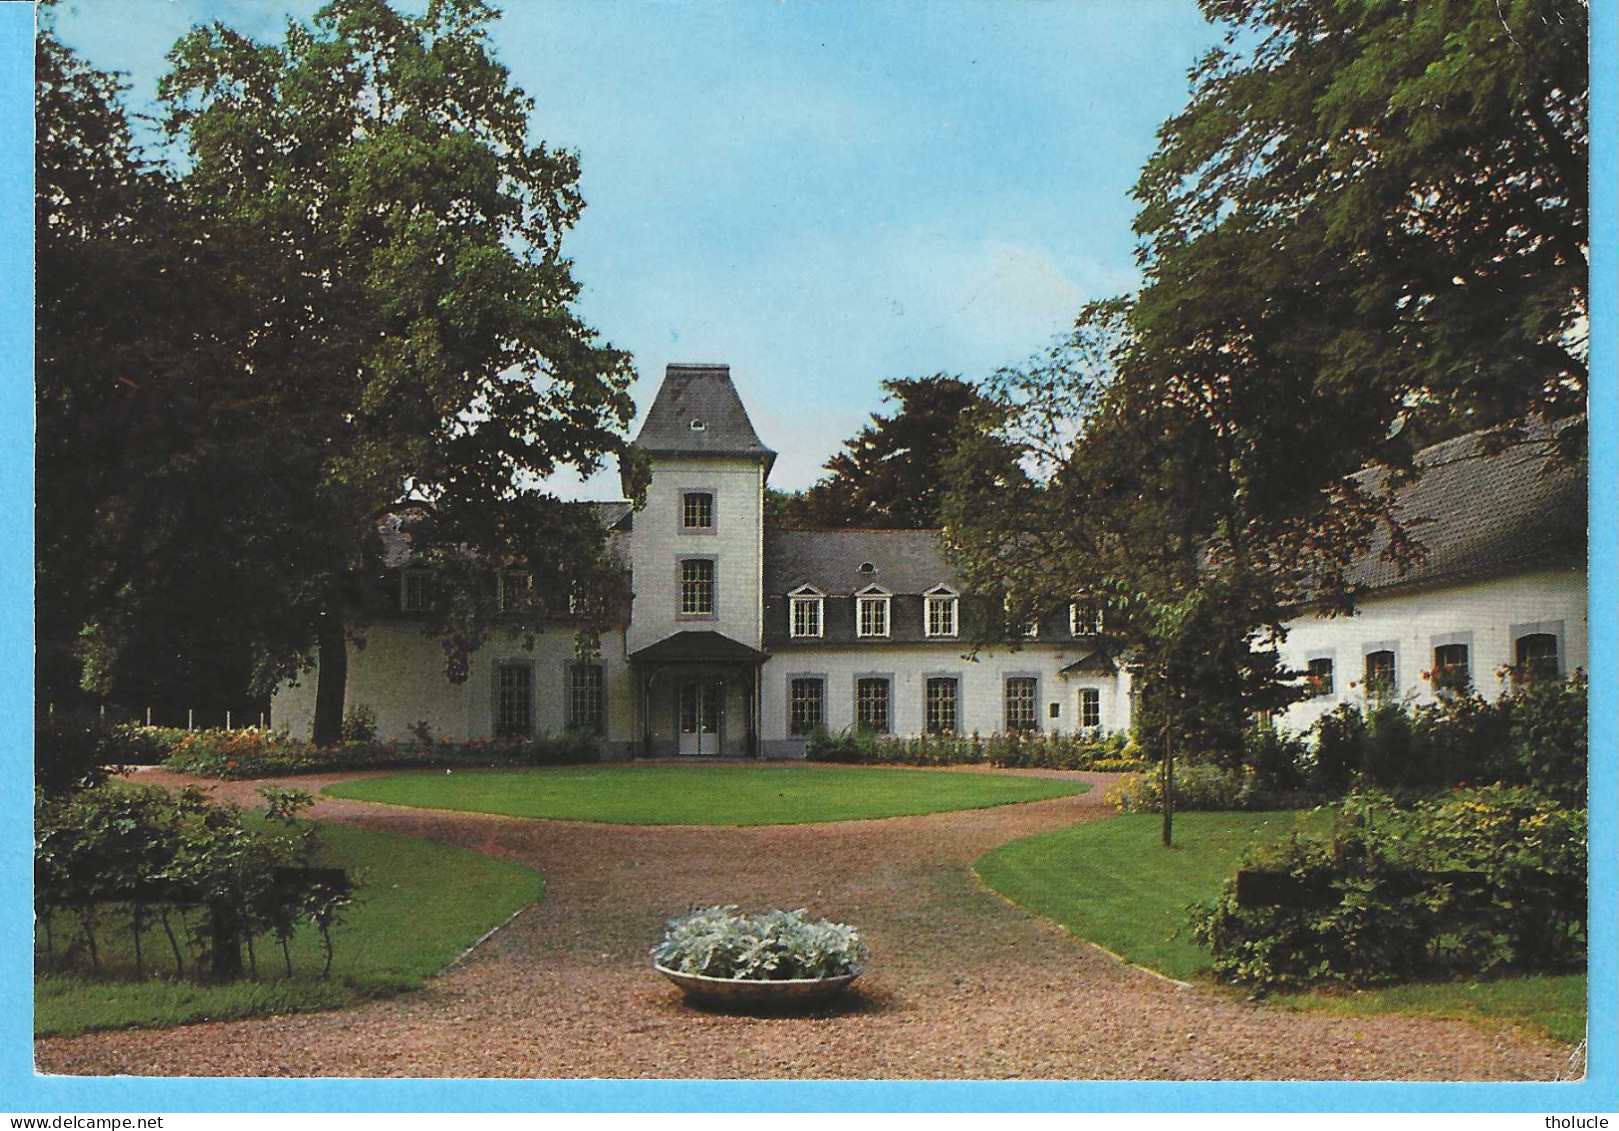 Houthalen-Helchteren (Limburg)-Domein "Hengelhoef"-Vakantiedorp-Village De Vacances-Kasteel-Le Château-Uitg.Lander-Eupen - Houthalen-Helchteren